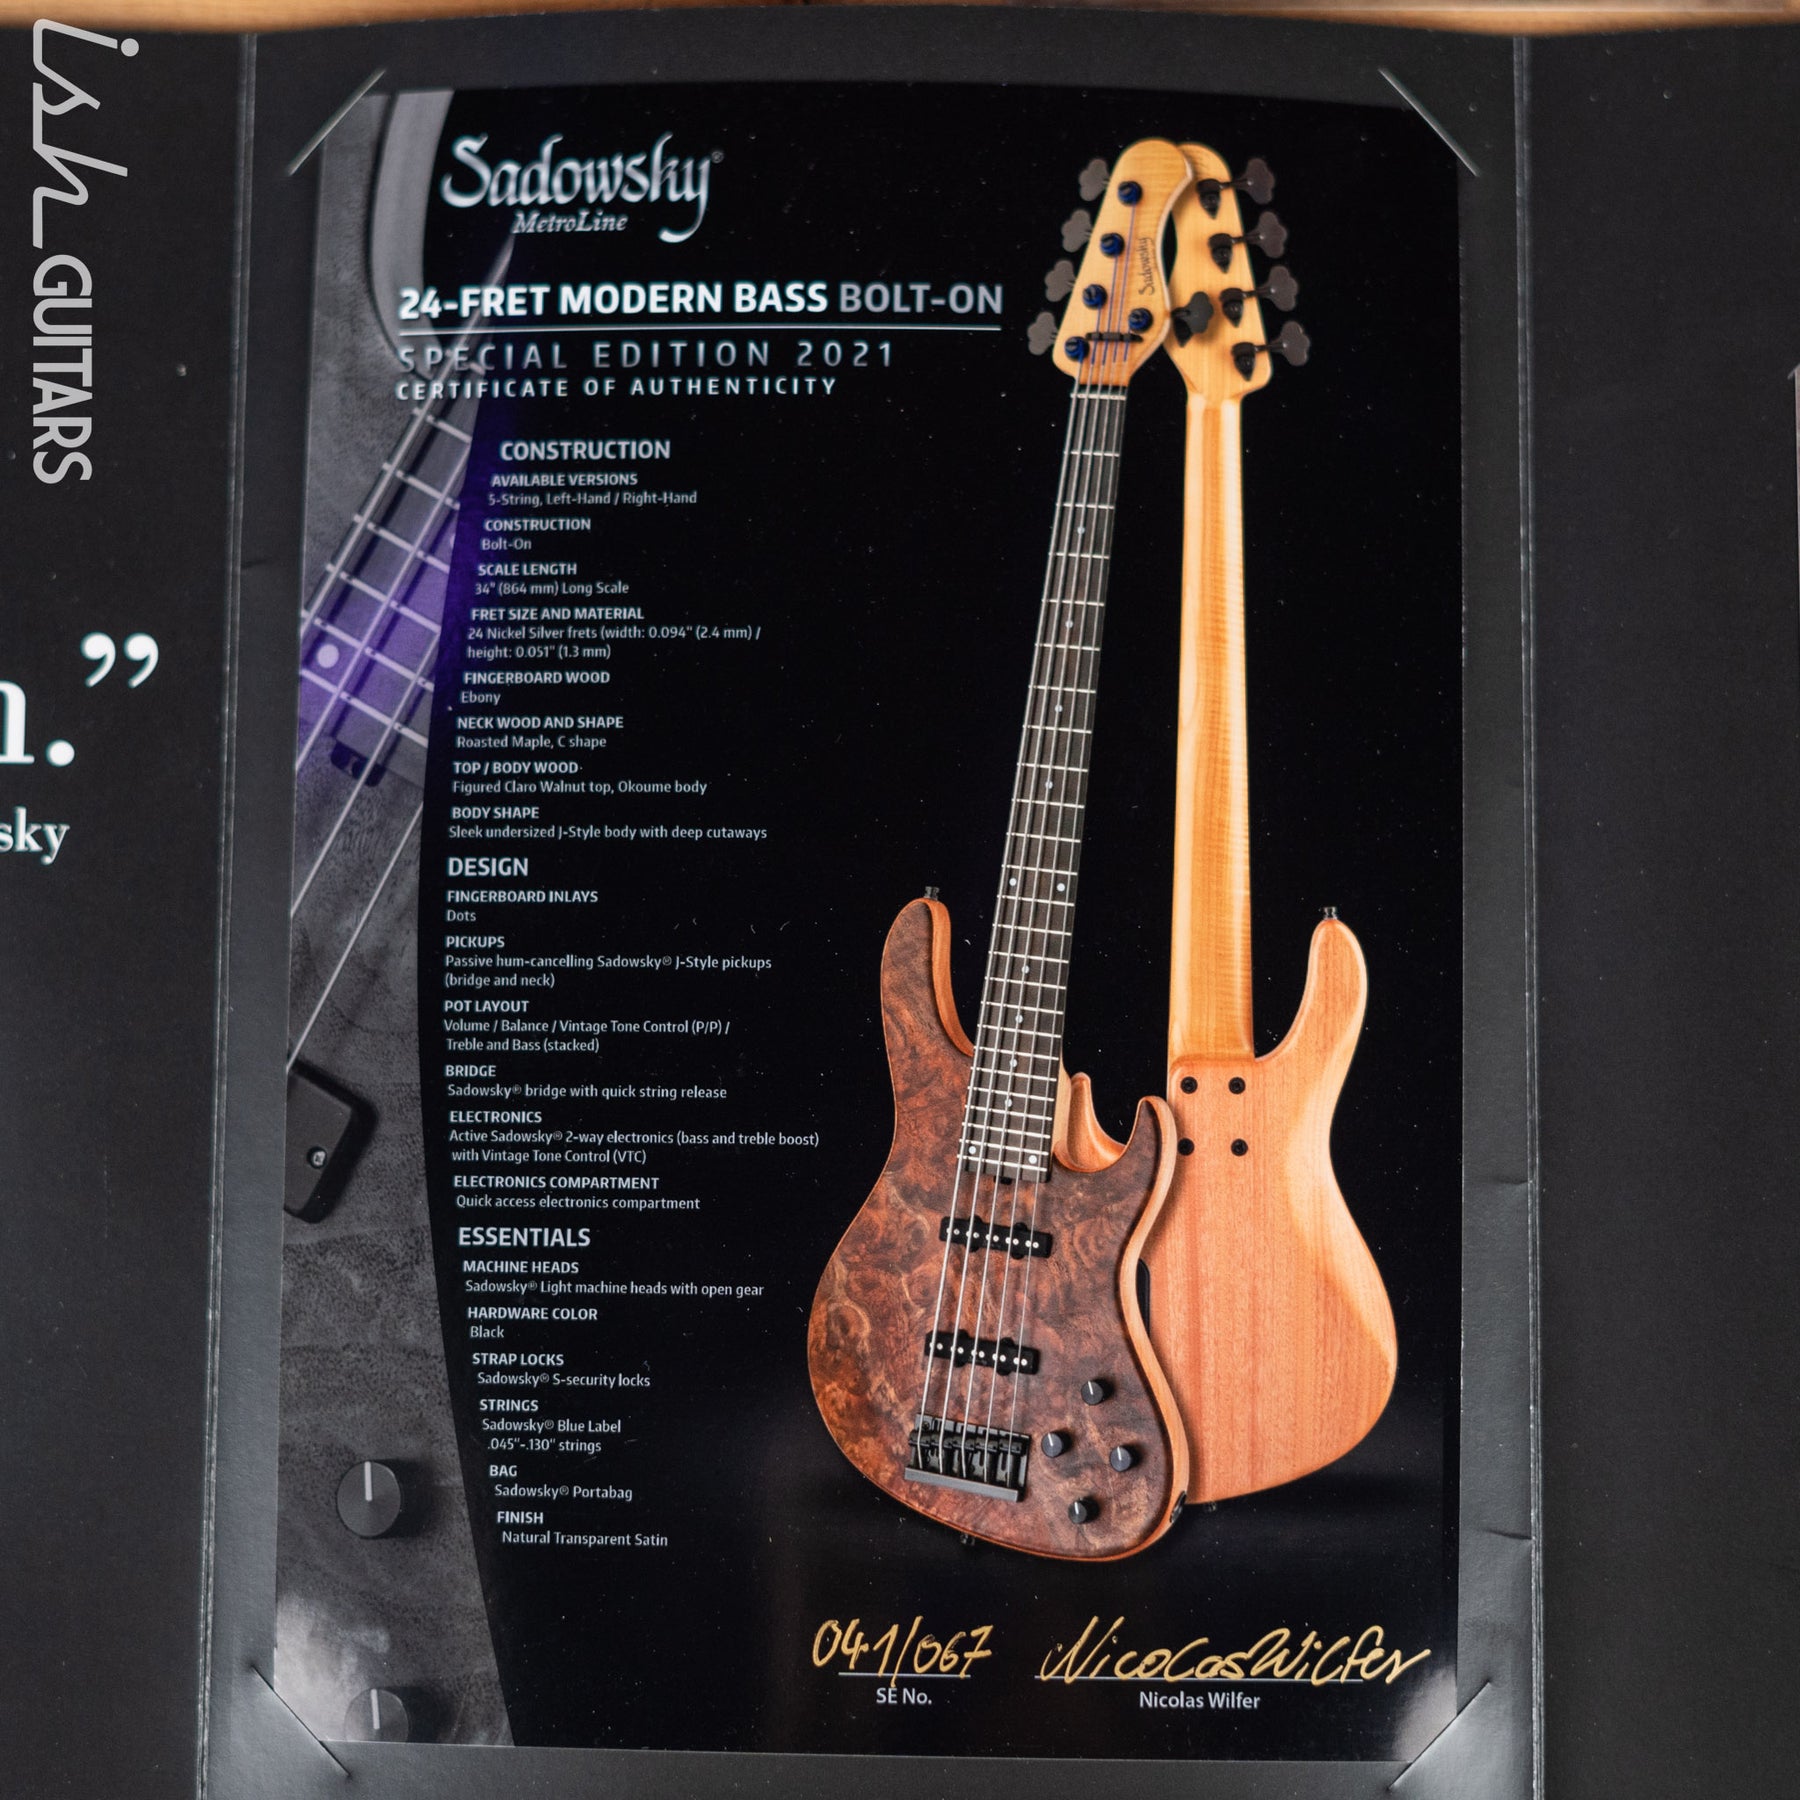 Sadowsky Metroline Special Edition 24 Fret 5-String Modern Bass 